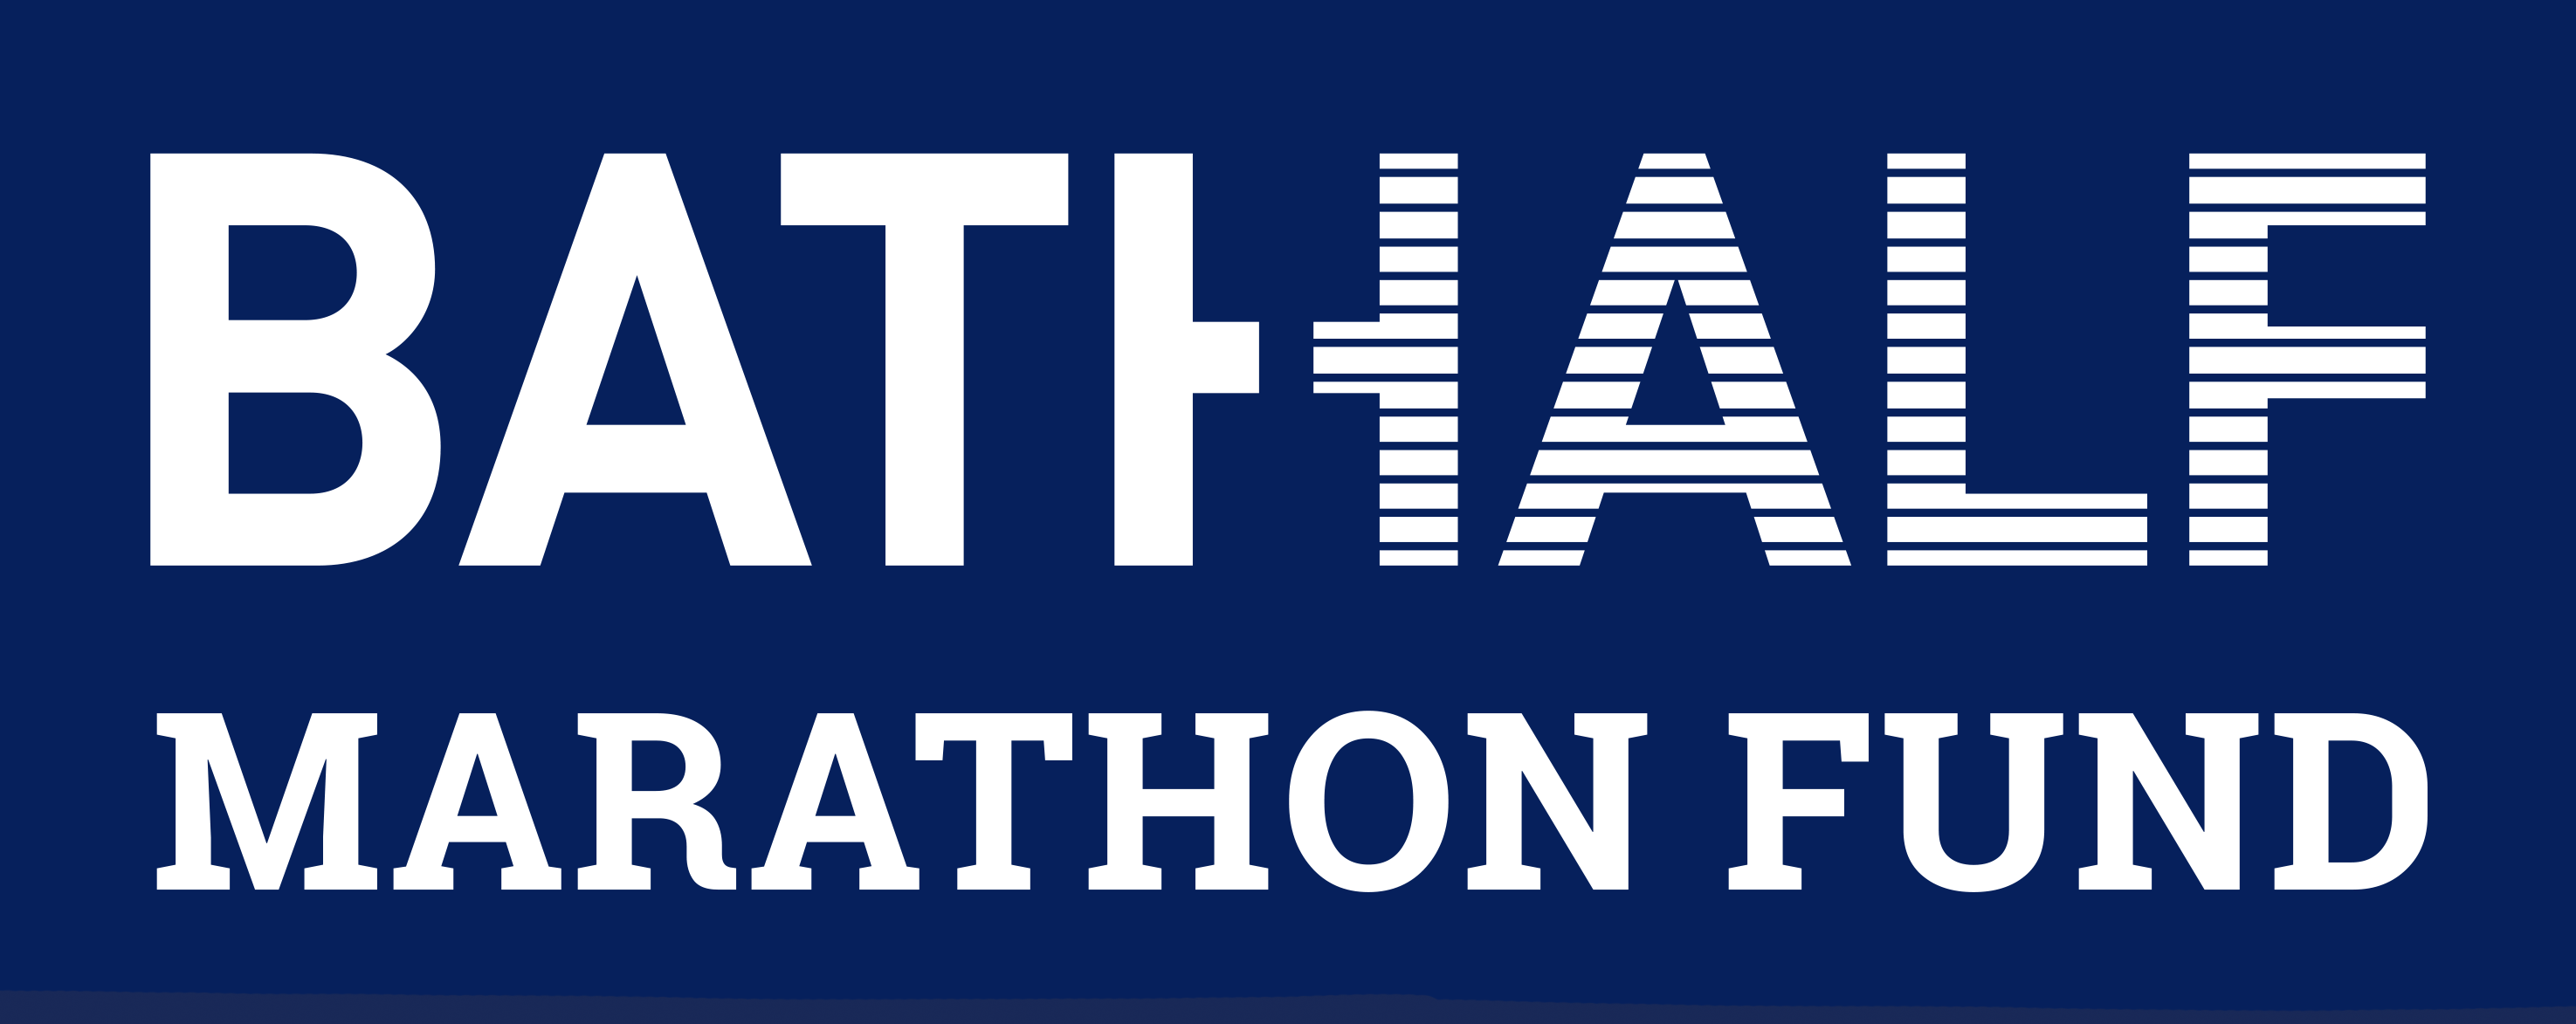 Bath Half Marathon Fund Grant